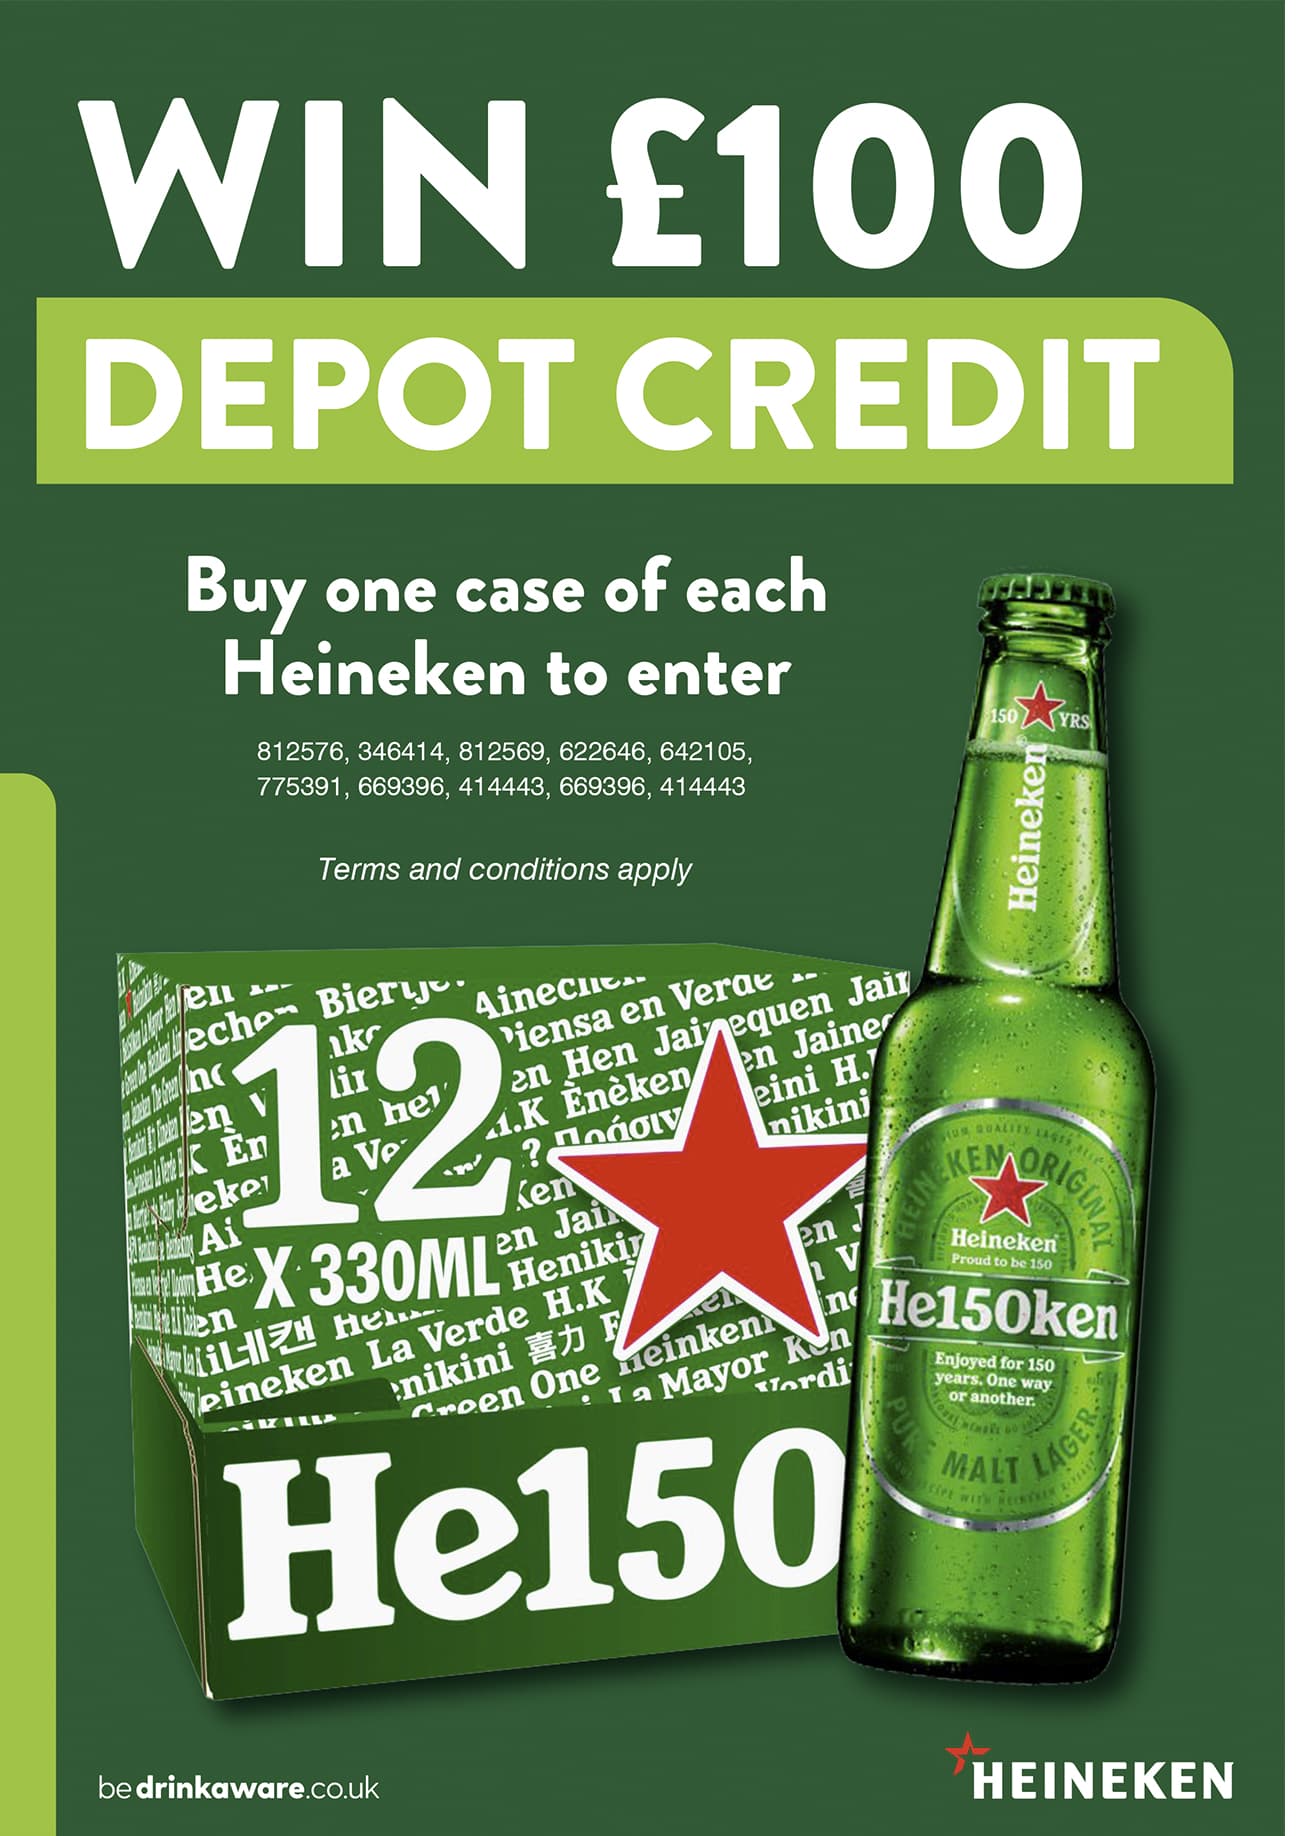 Win £100 of depot credit courtesy of Heineken